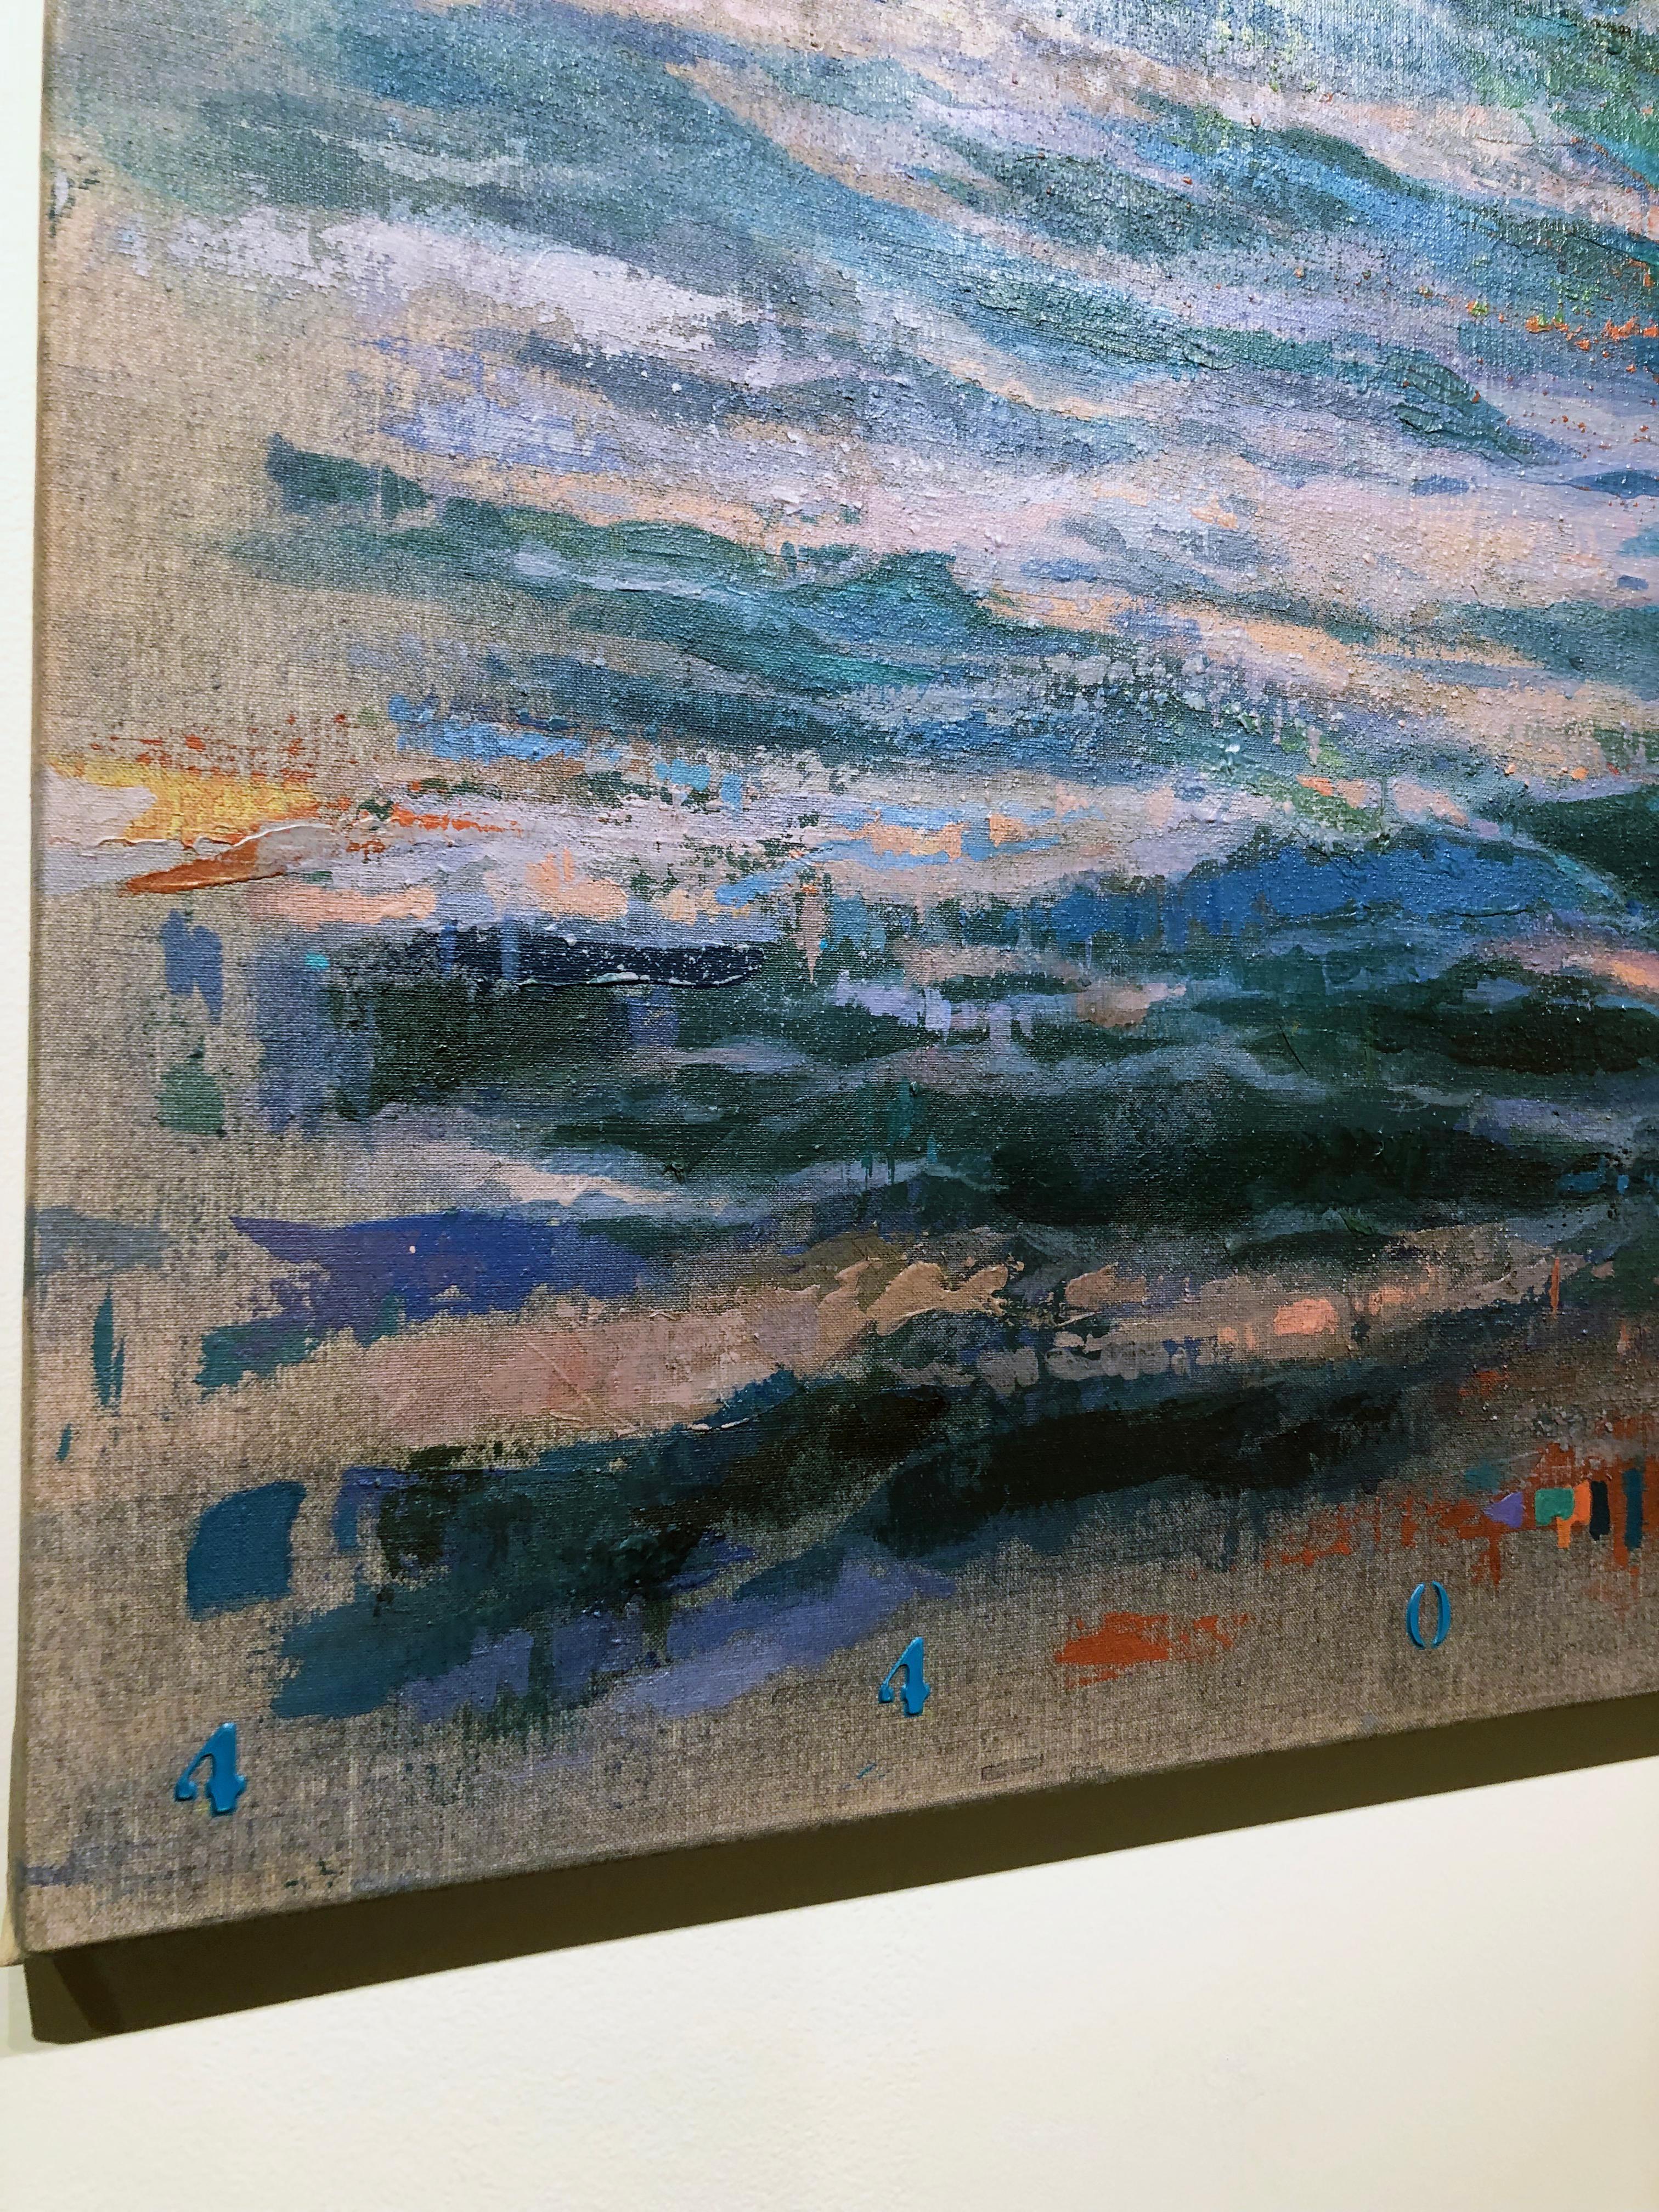 Sea Blue - Großes Ölgemälde des Meeres des spanischen Malers Albert Vidal 1